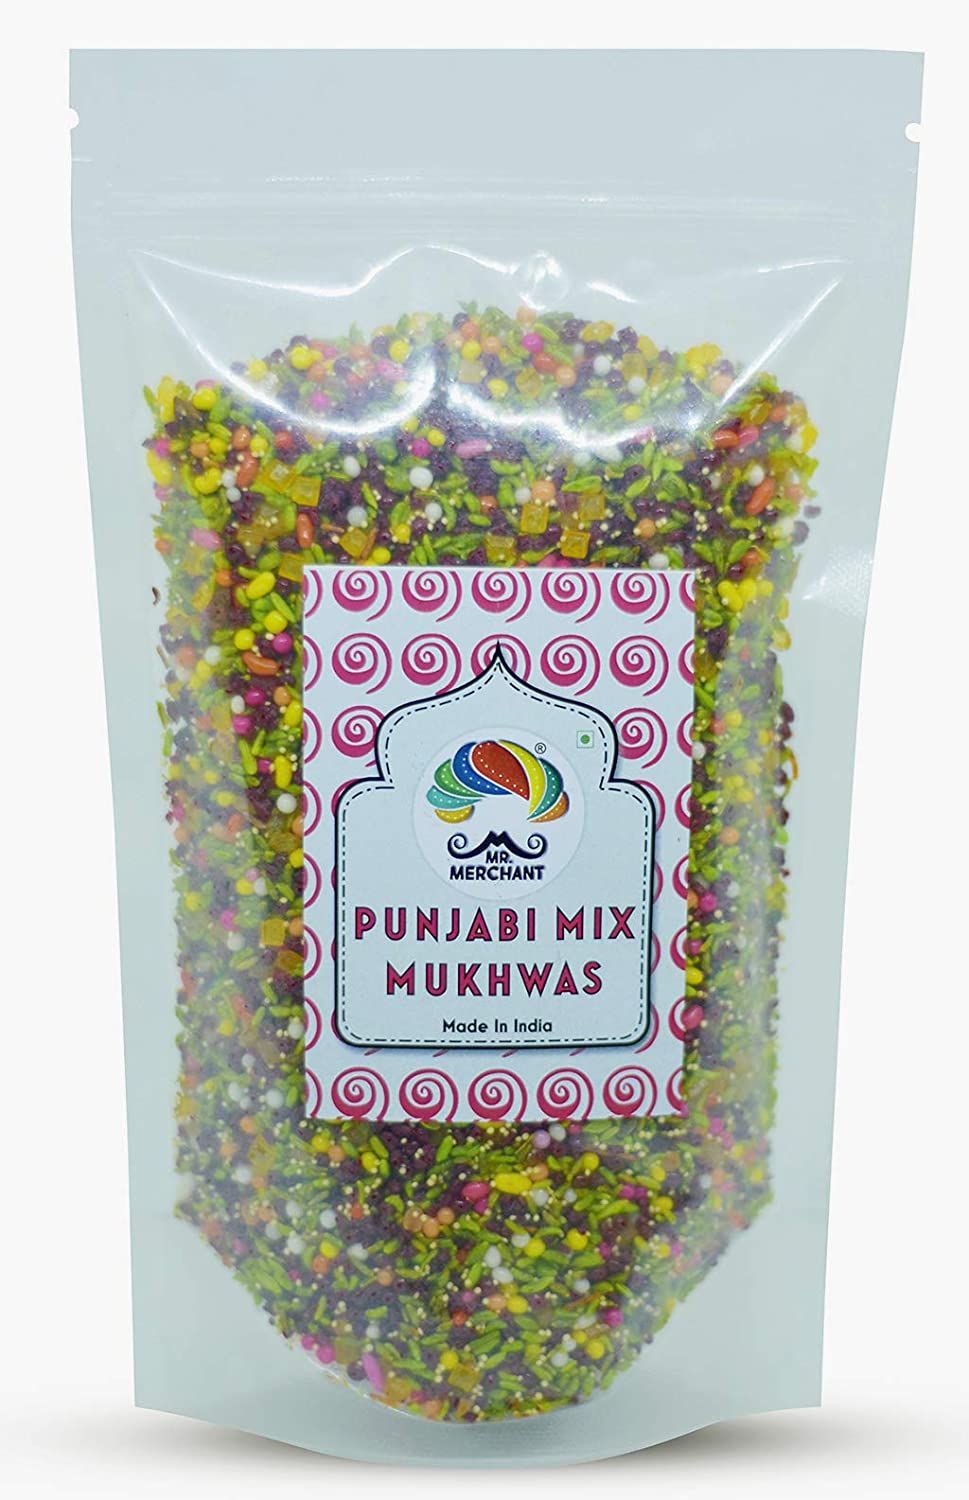 Mr. Merchant Punjabi Mix Mukhwas Image